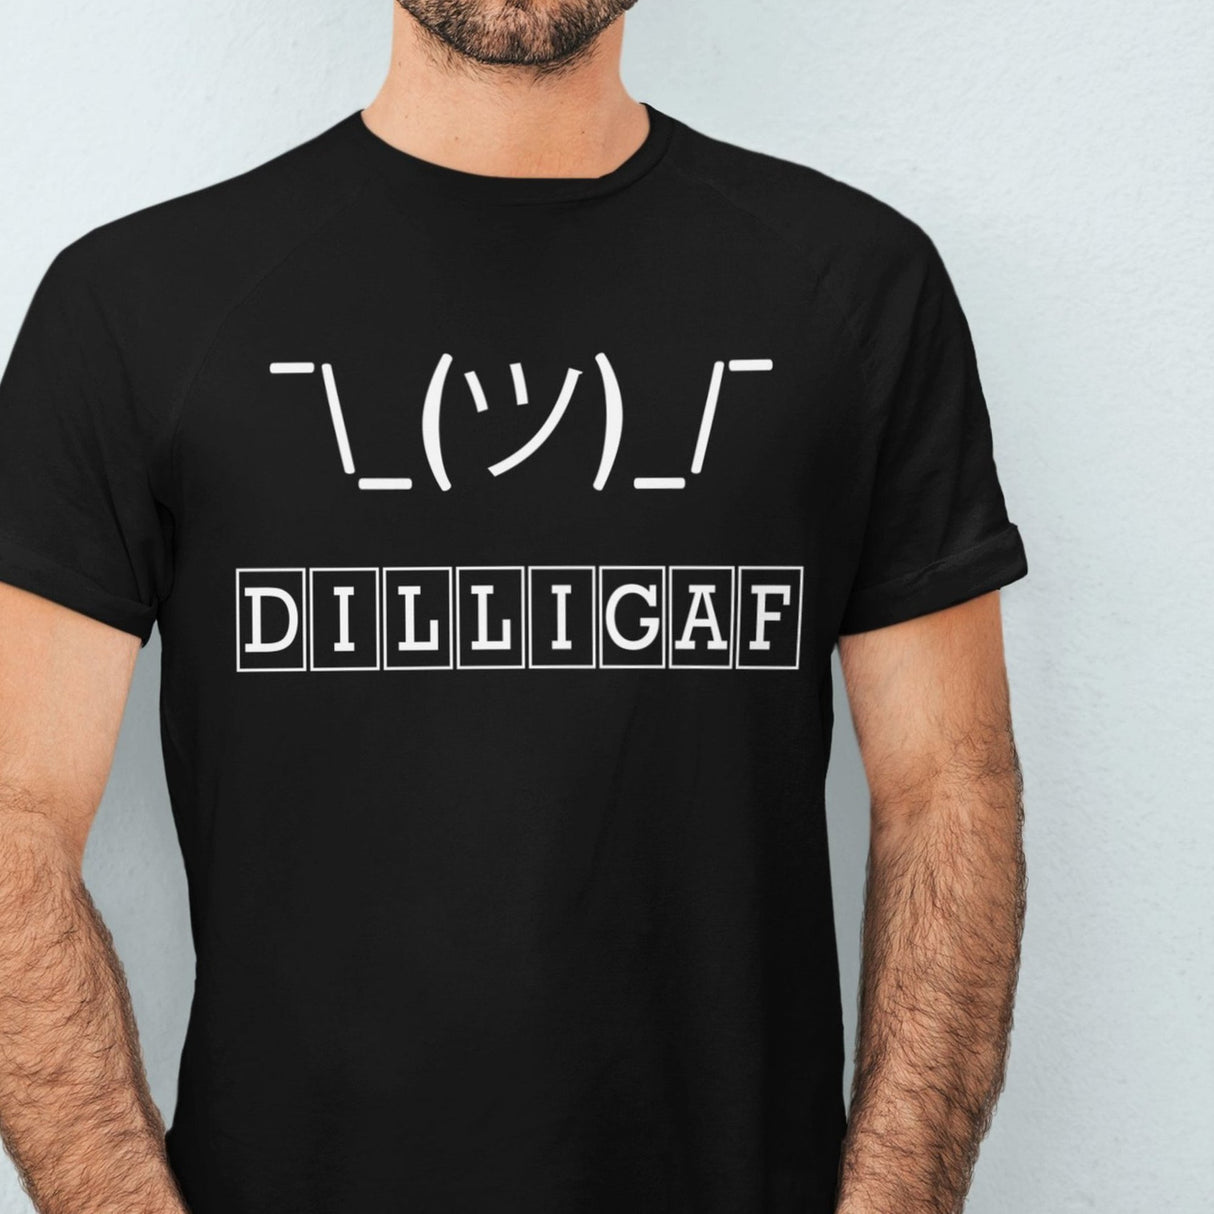 dilligaf-does-it-look-like-tee-i-give-af-t-shirt-dilligaf-tee-t-shirt-tee#color_black